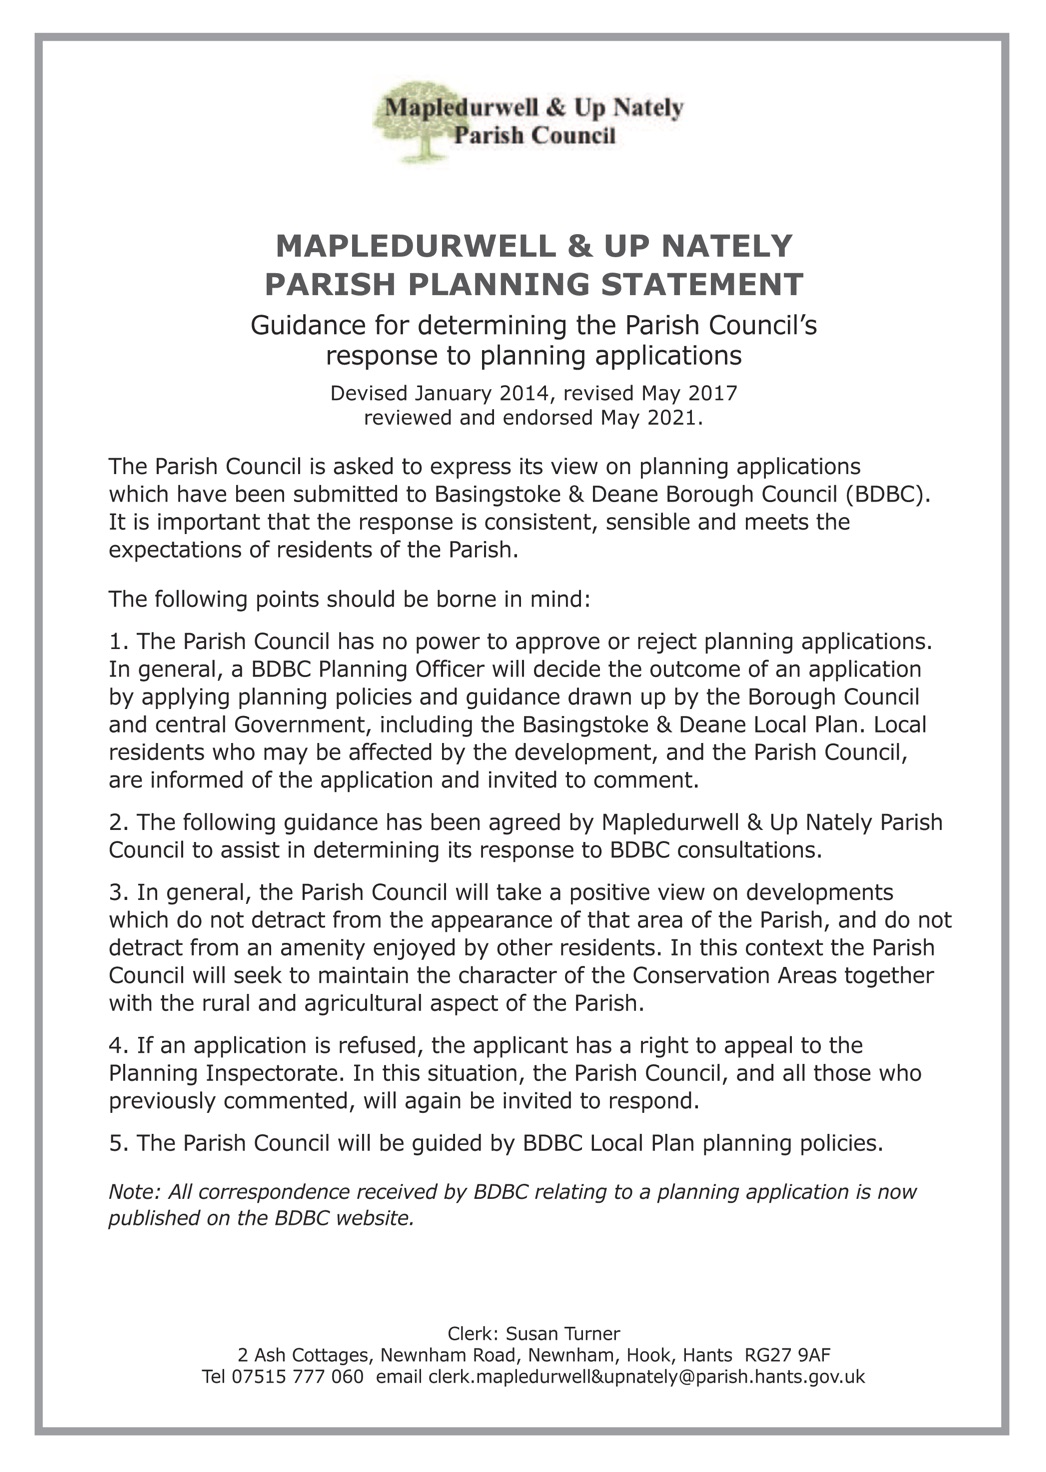 Mapledurwell & Up Nately Parish Council Parish Planning Statement